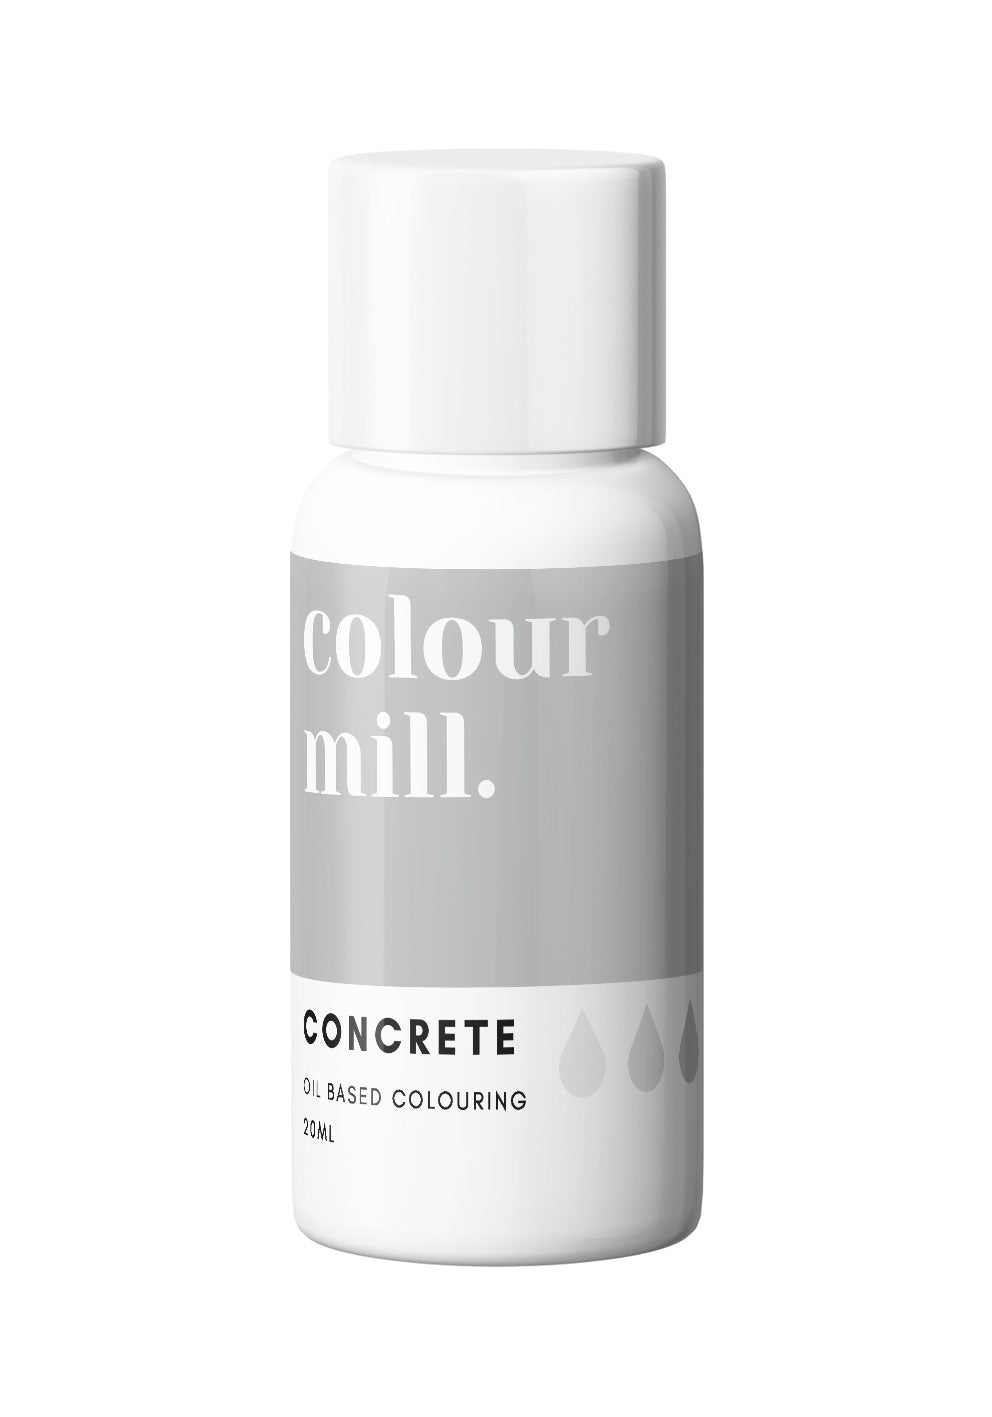 CONCRETE - 20ml Colour Mill